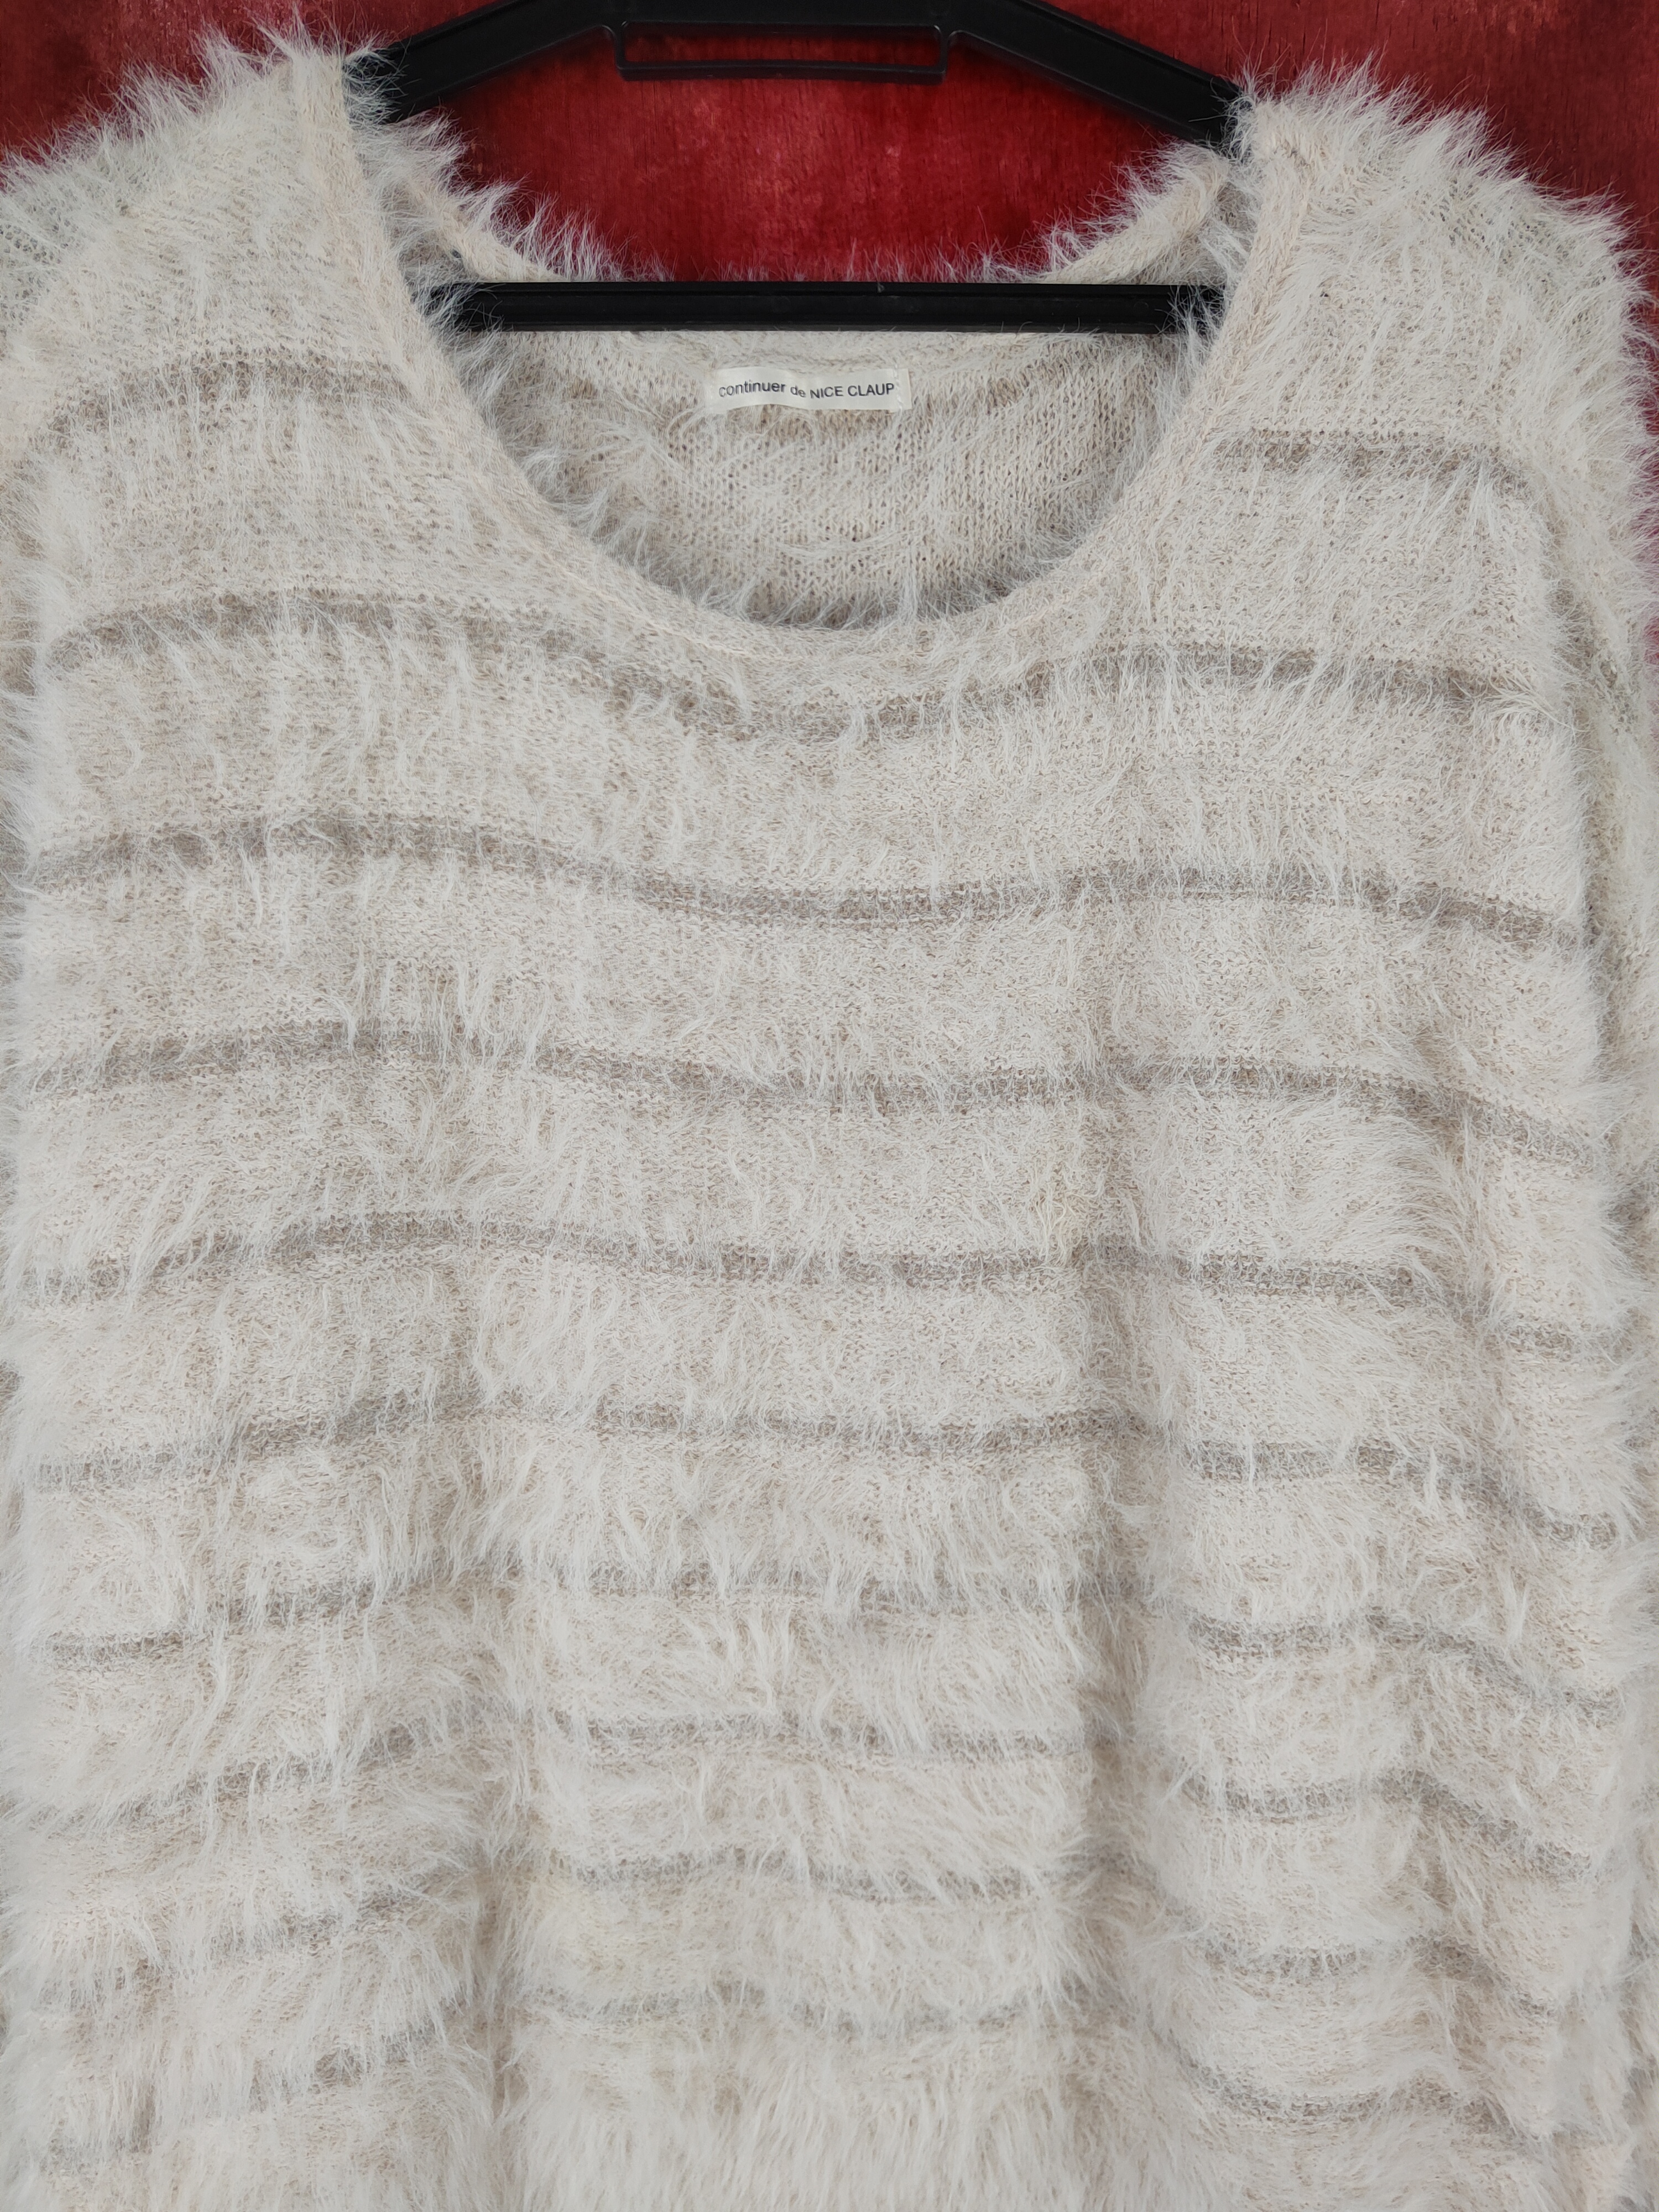 Japanese Brand - Continuer de Nice Claup Shaggy Fur Mohair Knitwear #S795 - 2